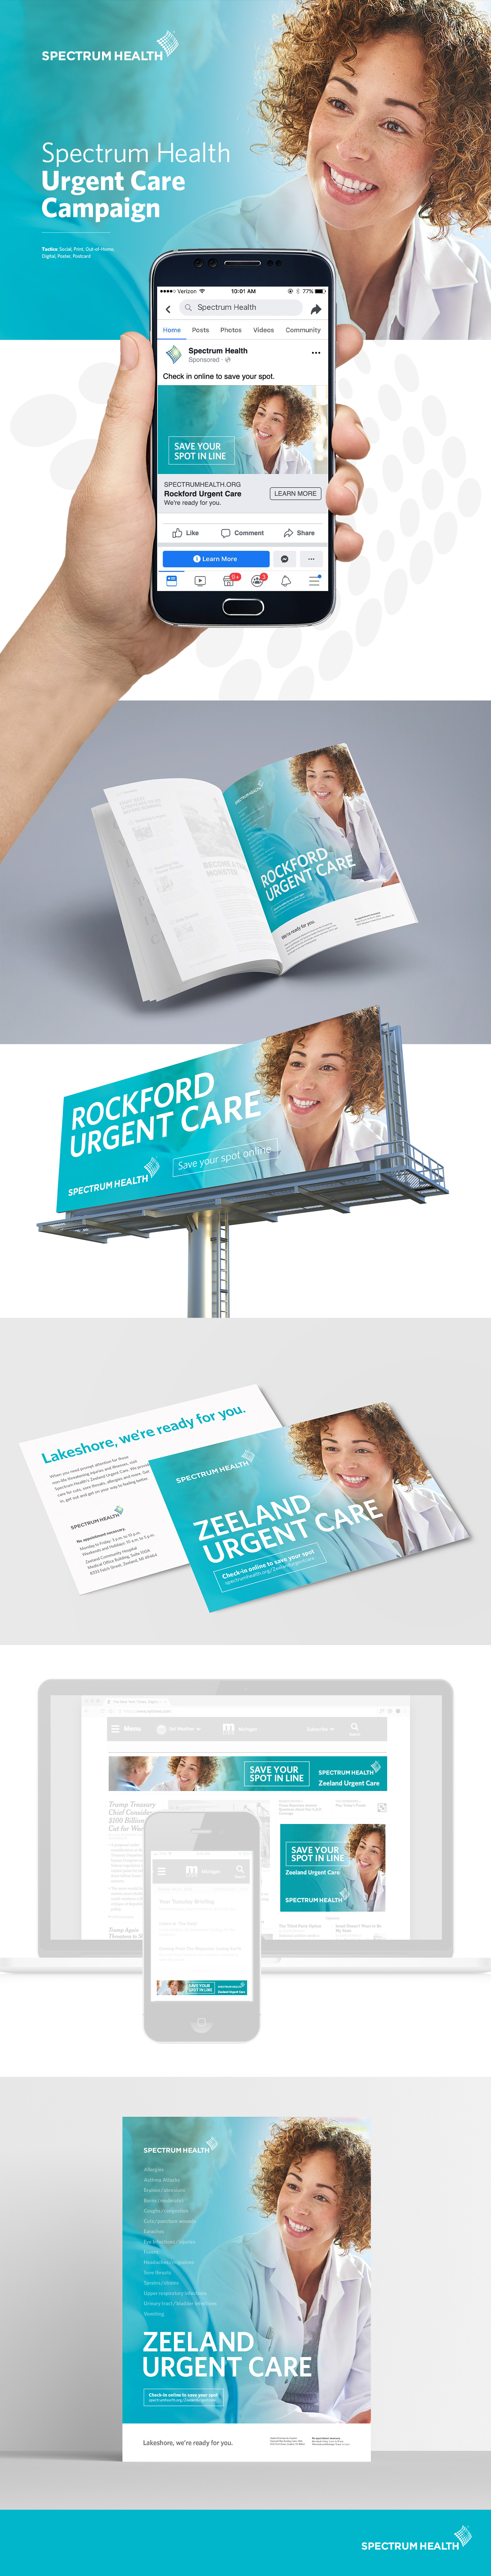 urgent care spectrum Health west michigan Michigan healthcare marketing   rockford Zeeland